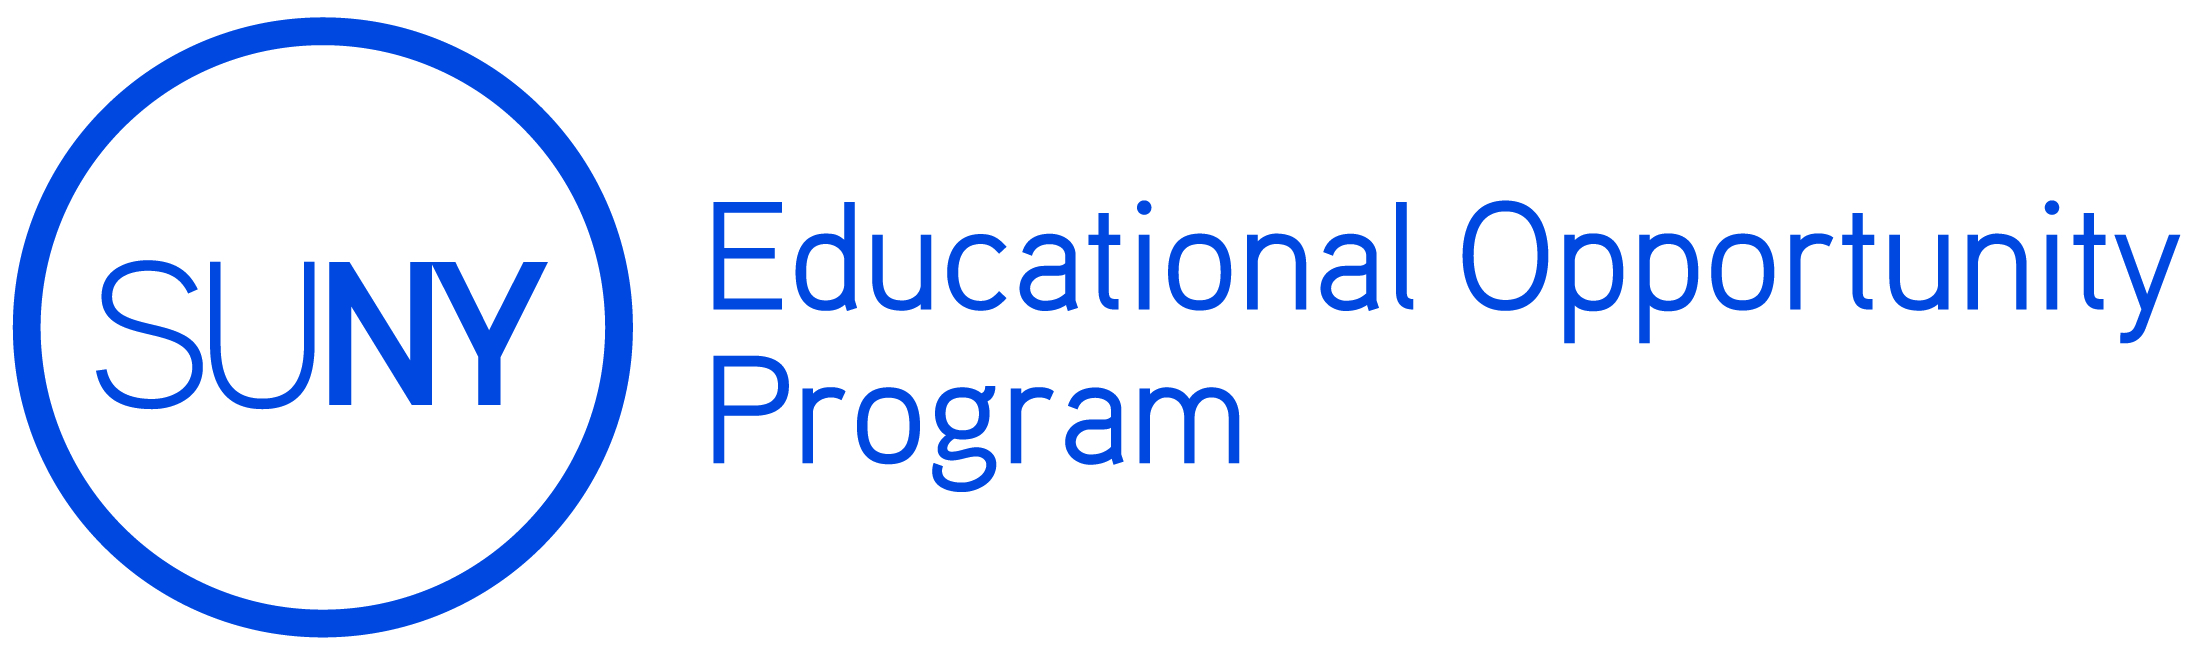 Educational Opportunity Program Logo